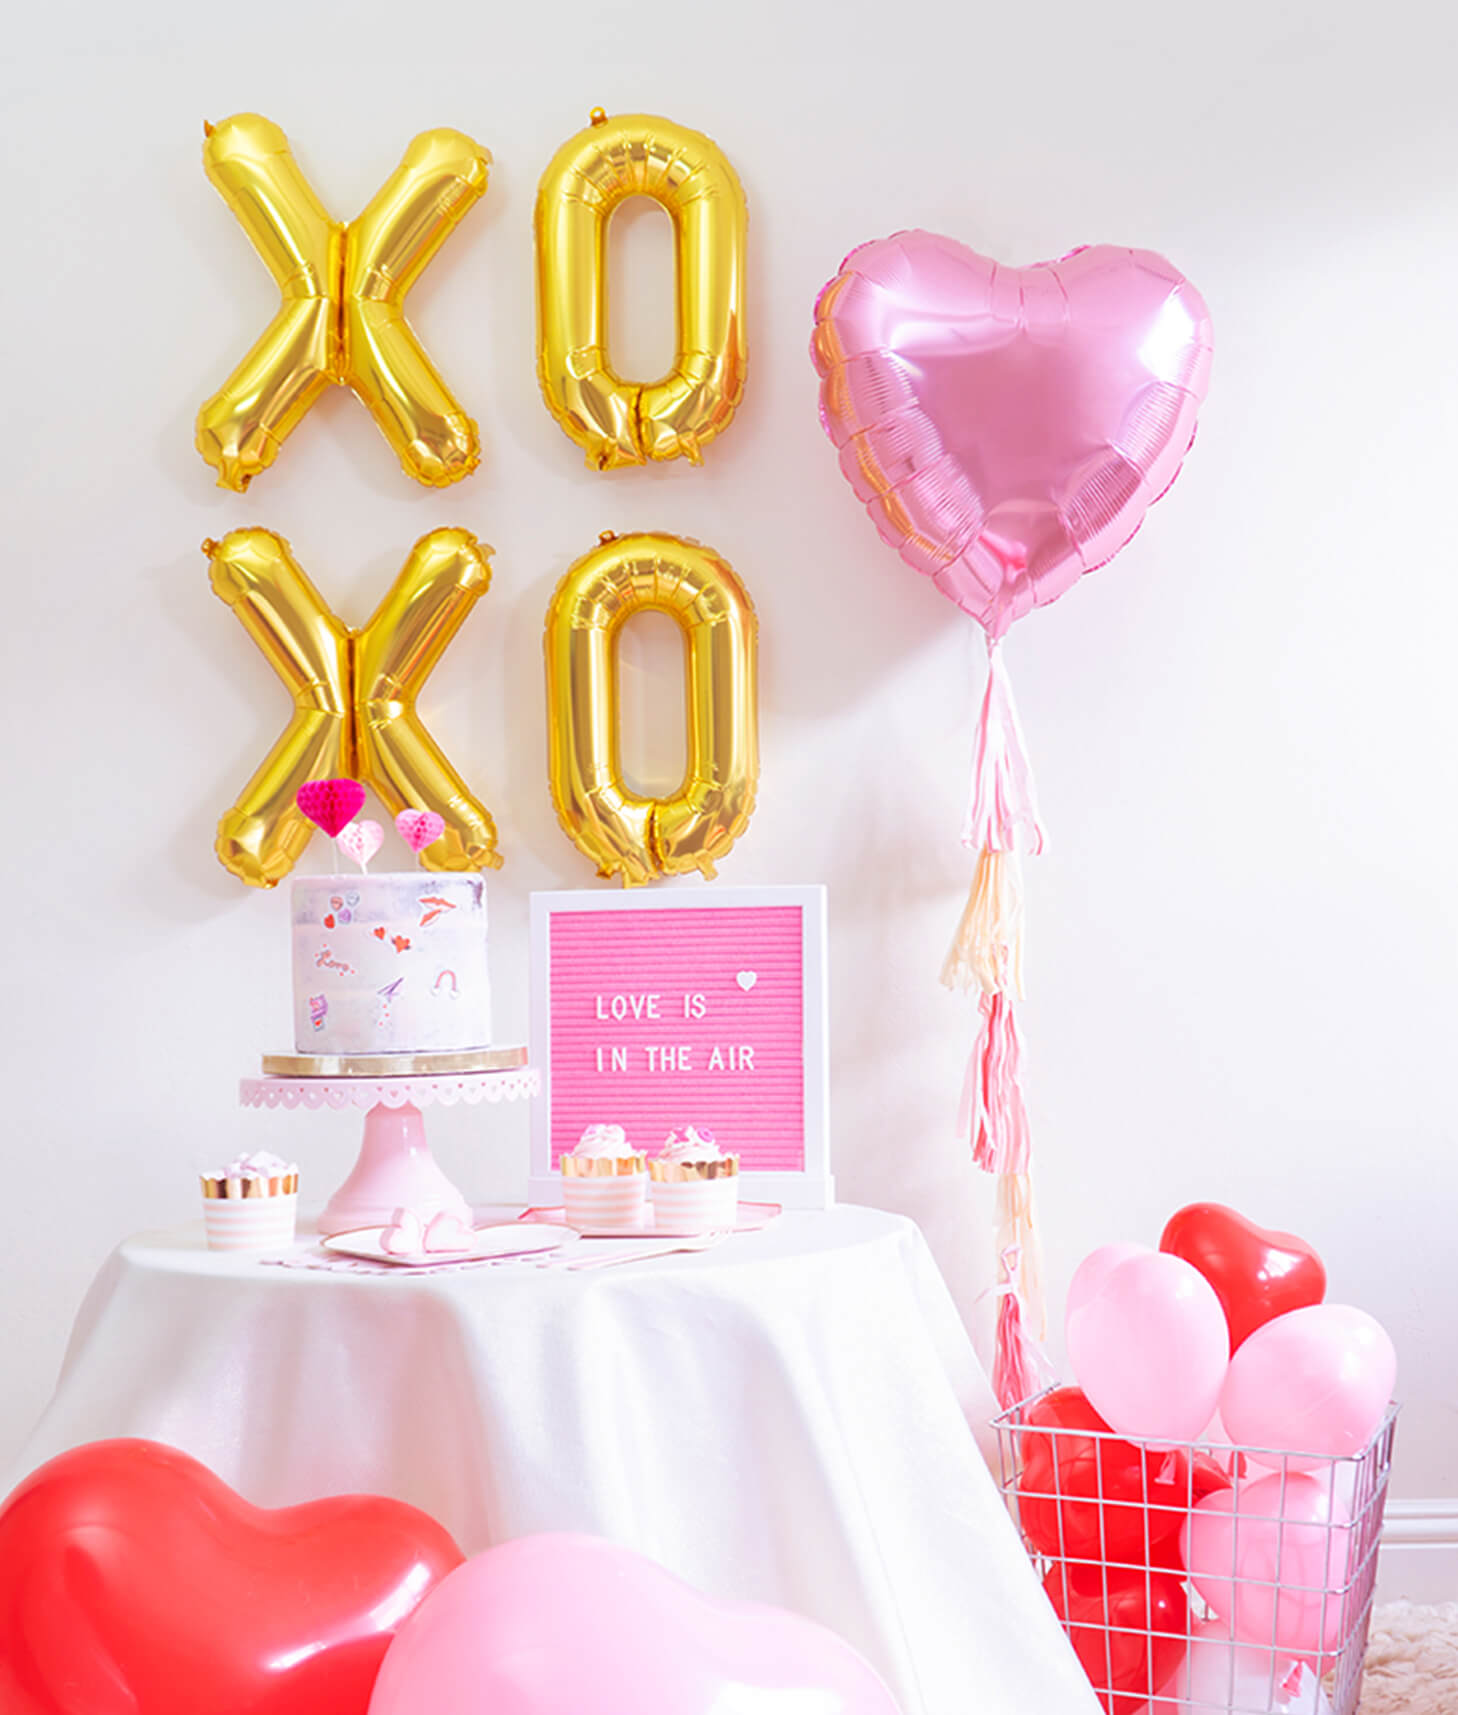 Momo party Valentine's Day Mini Kit with Xoxo foil balloons,Pink Heart Foil balloon, Heart Shaped Latex balloons, Meri meri Blushing Heart plates, Pale pink side plates for Valentine's Day and Galentine's Day celebration